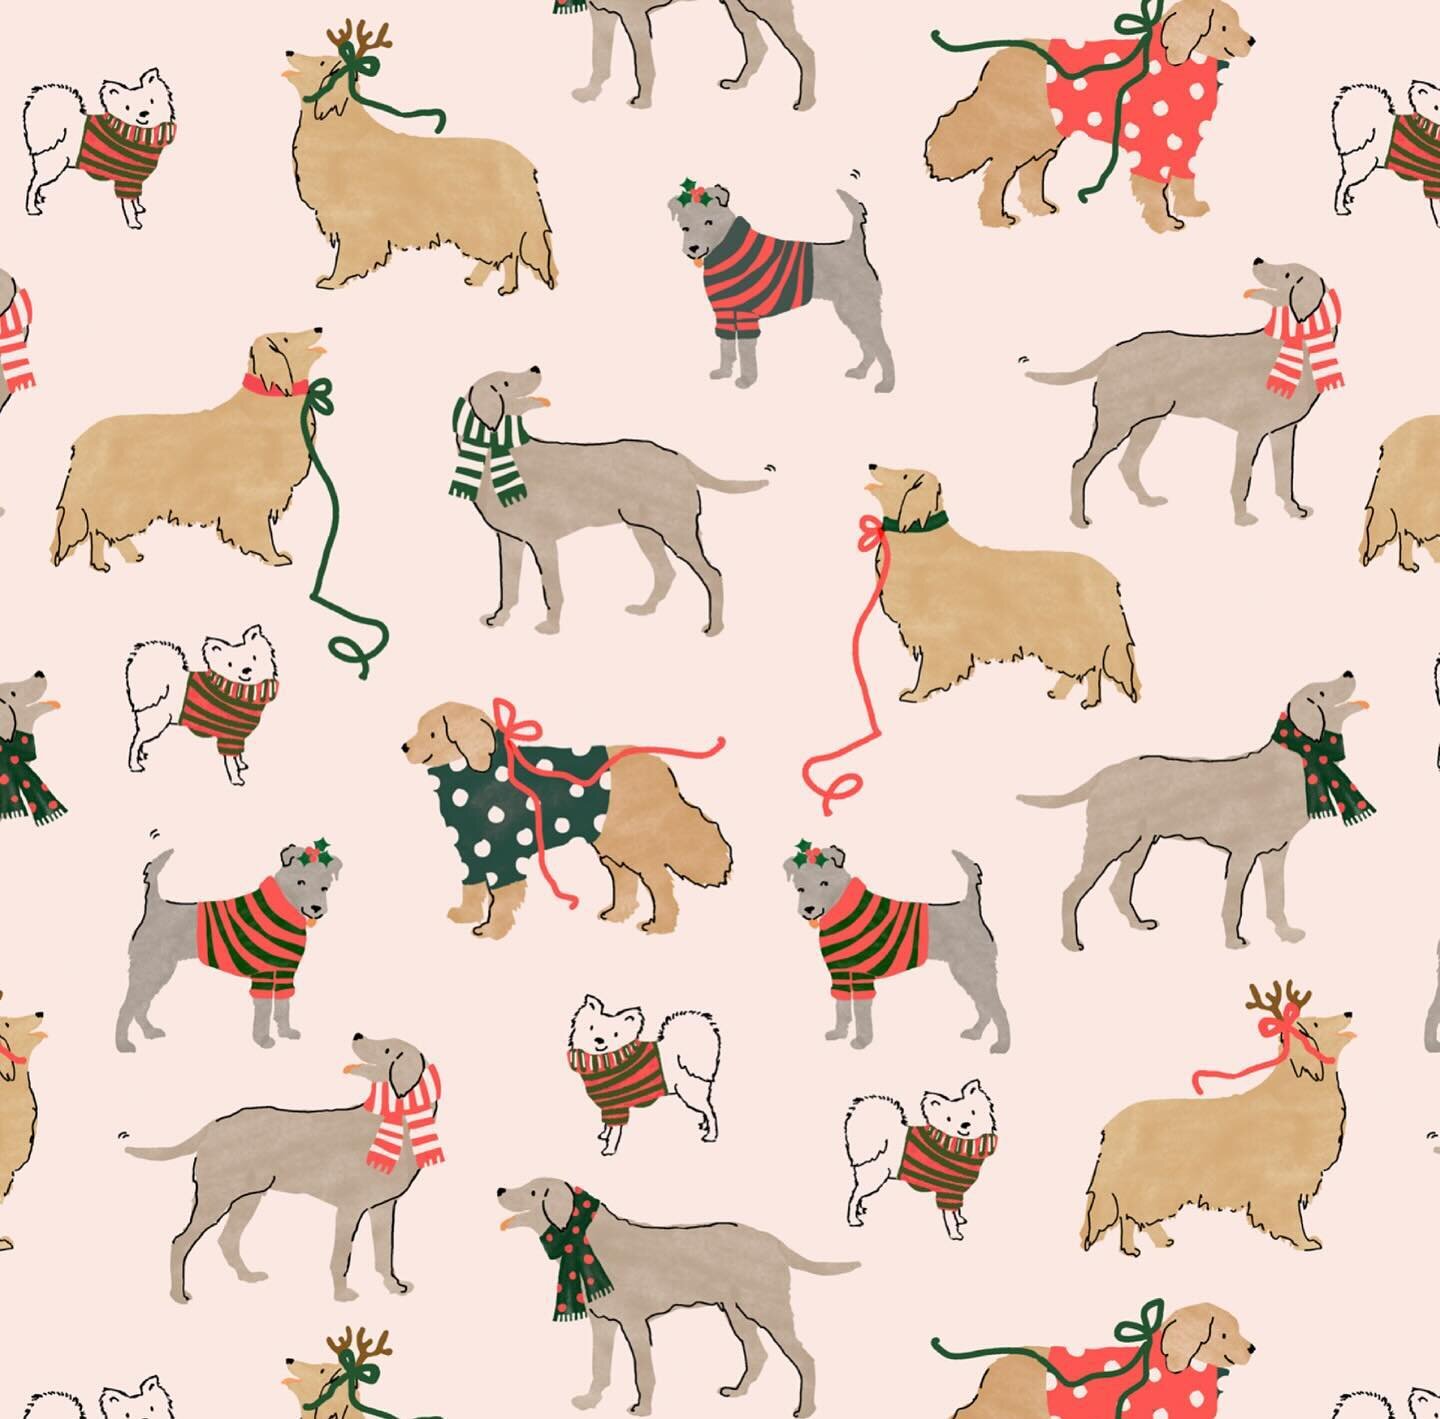 Happy Holidays ✨
.
.
.
.
.
 #anonastudio #patterndesign #printdesign #printstudio